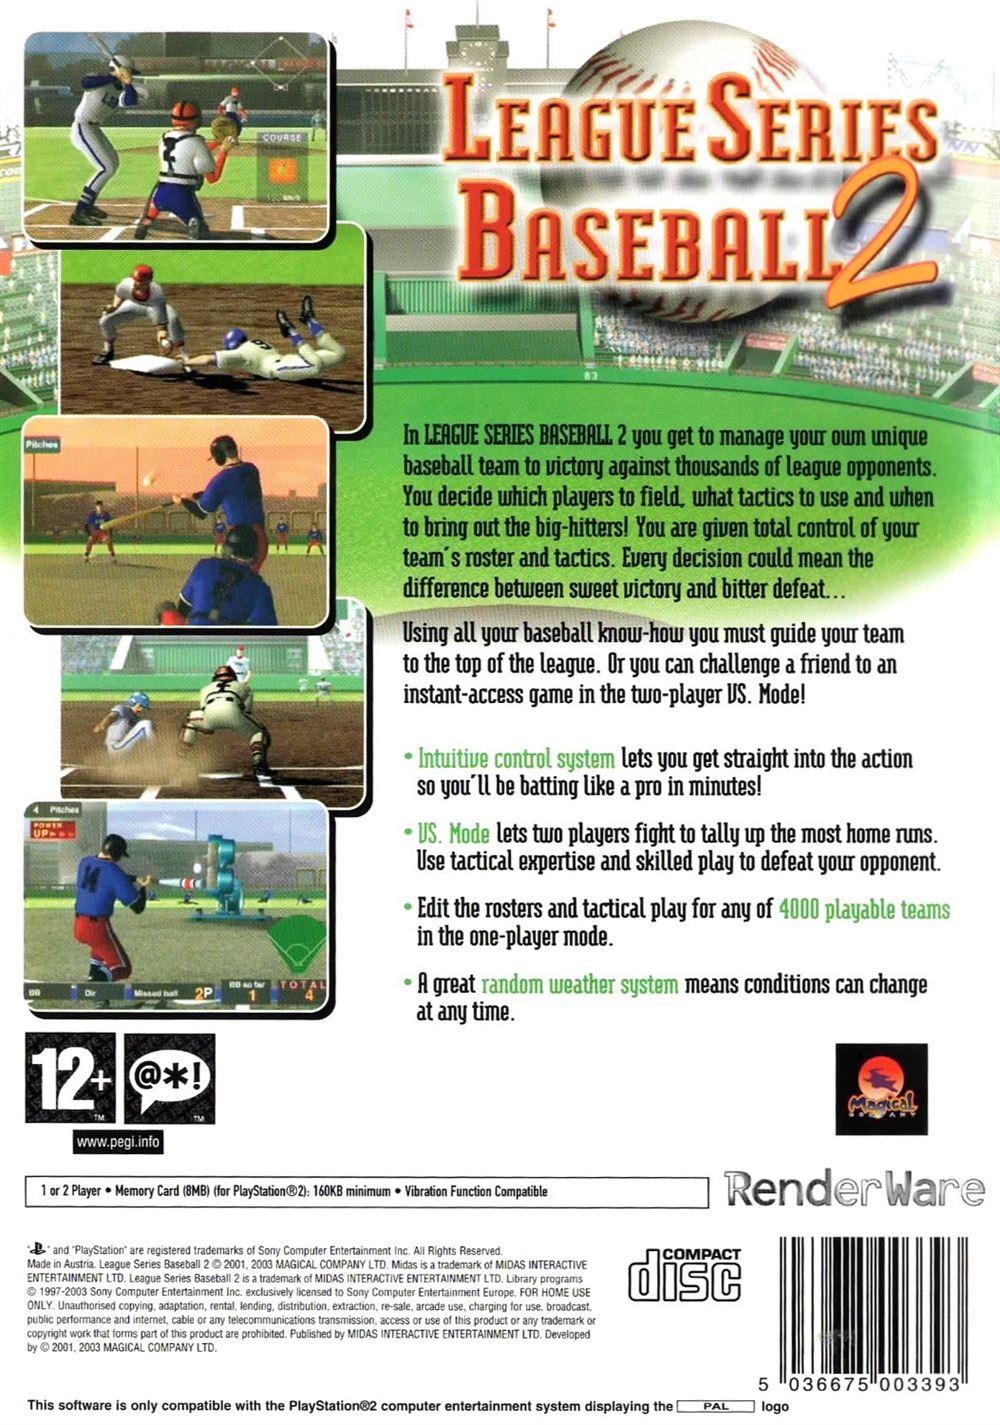 League Series Baseball 2 PS2 (PlayStation 2) - UK Seller